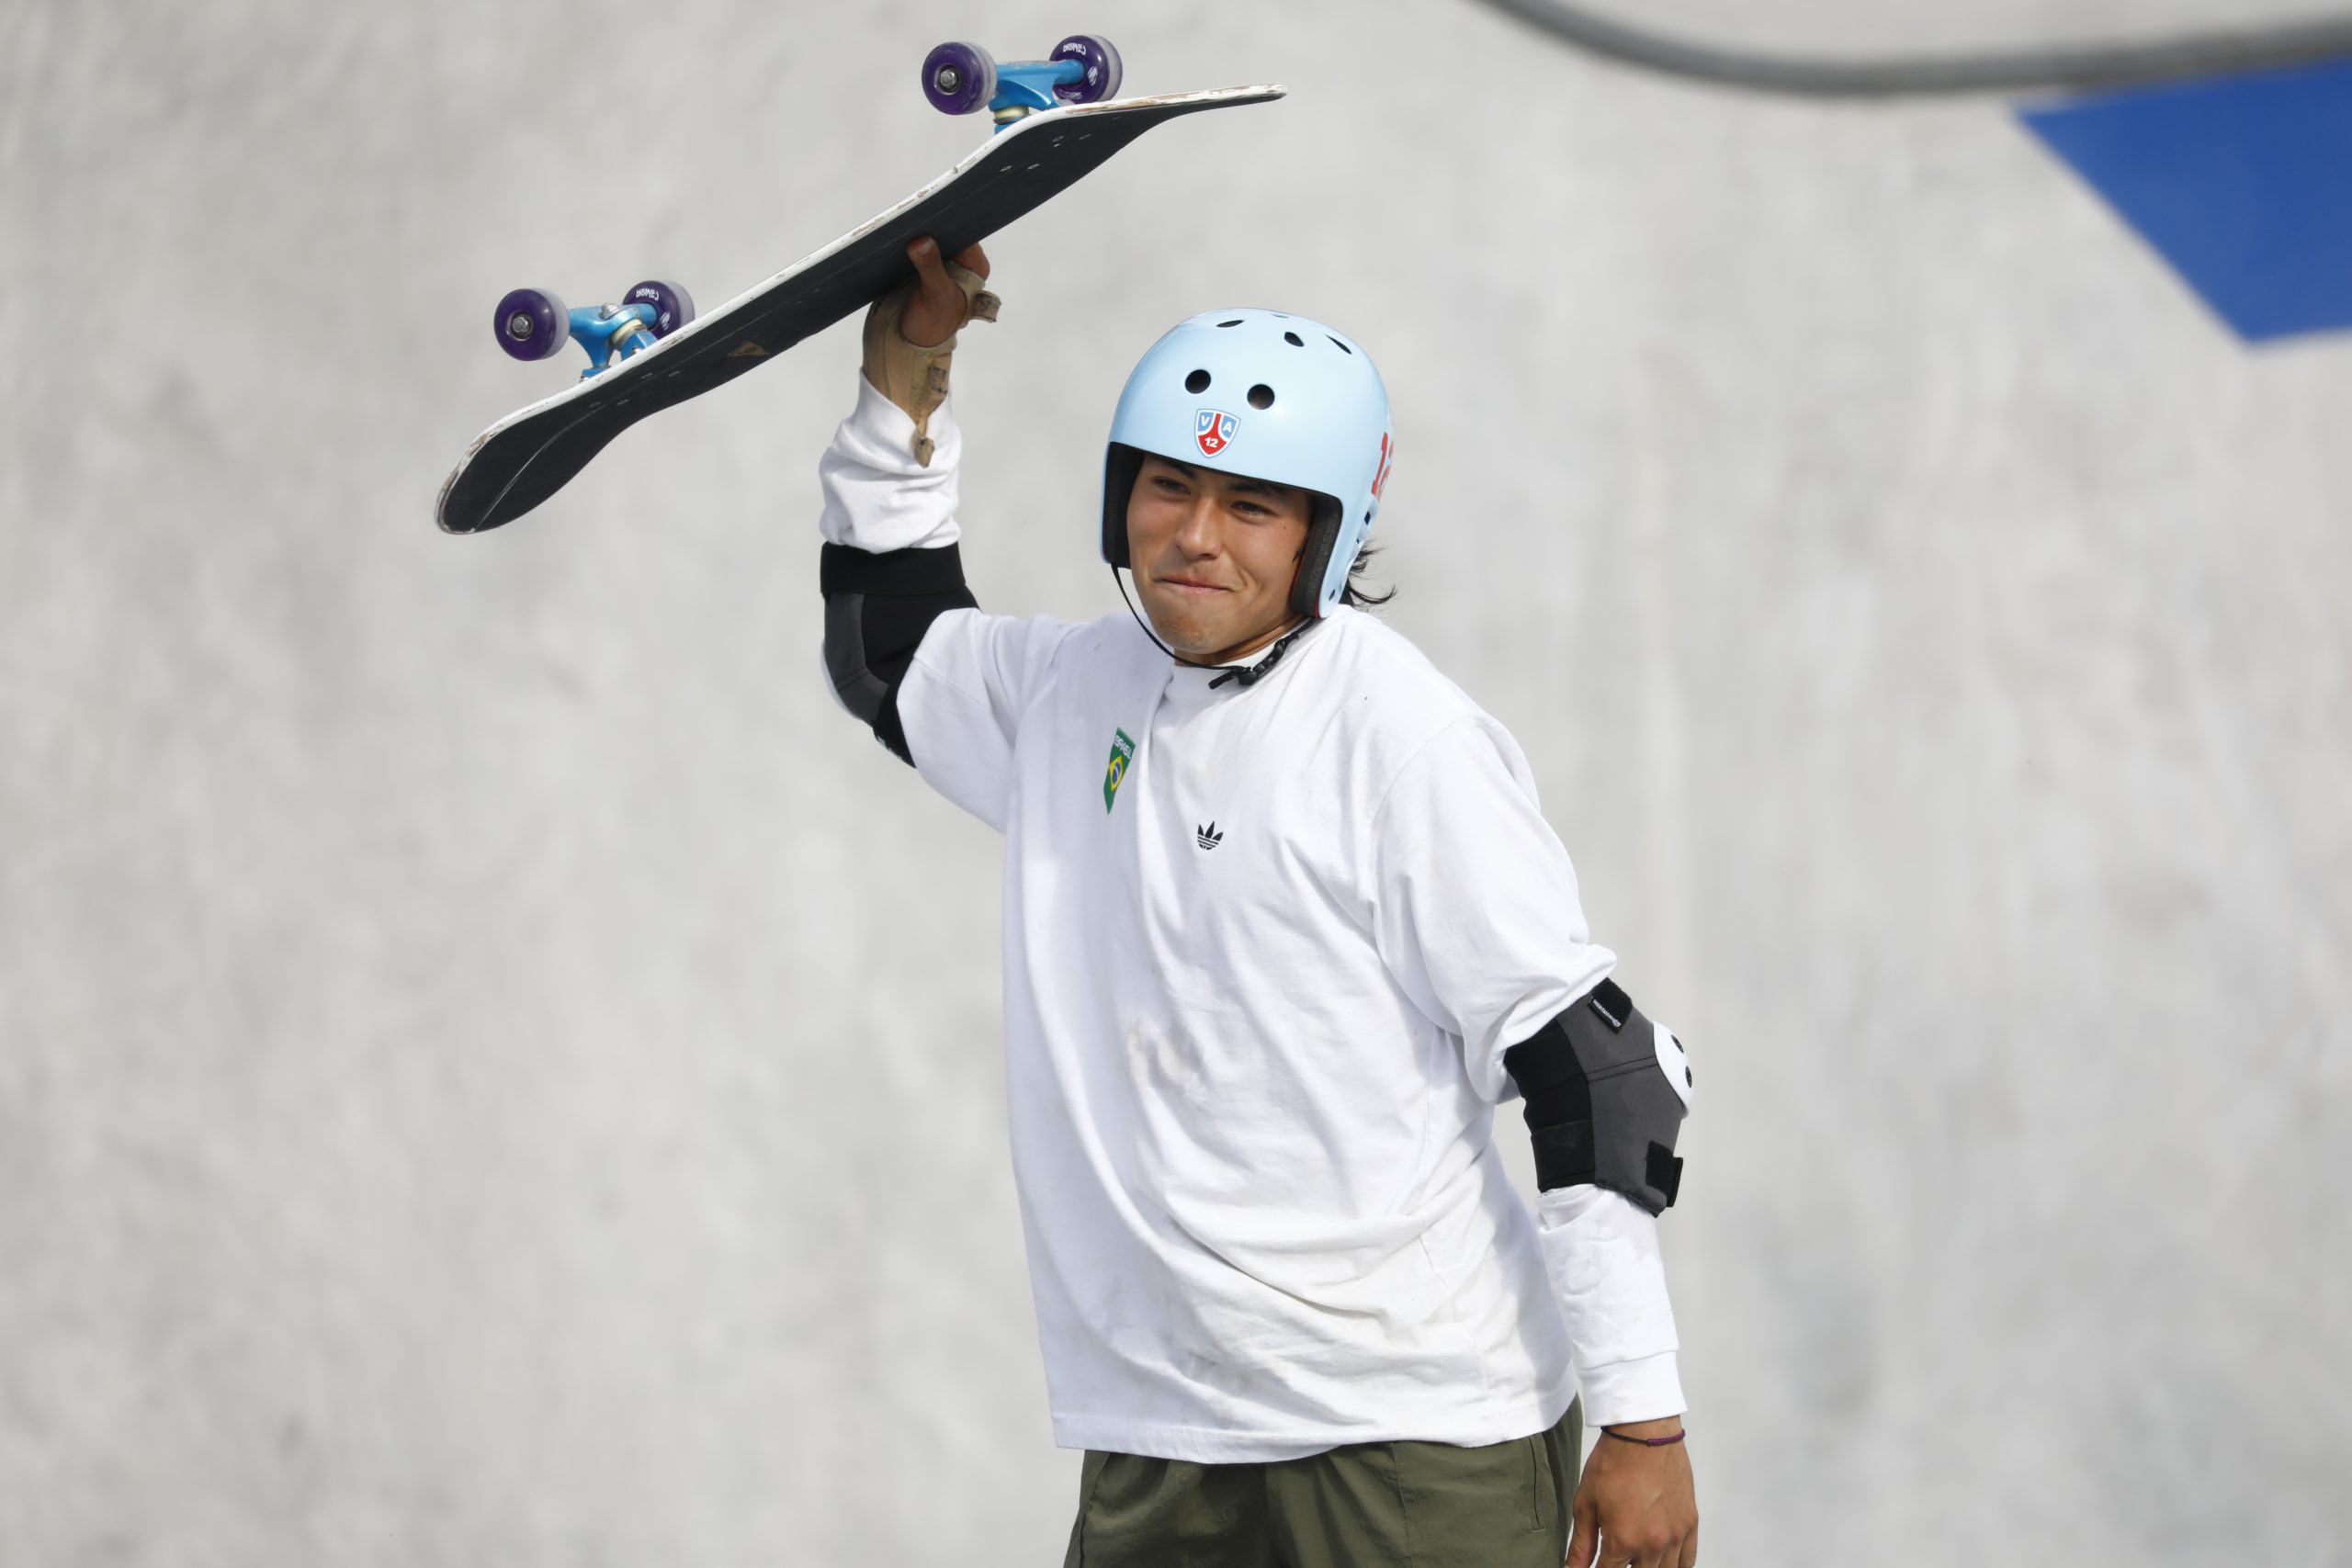 Augusto Akio skate park medalha de prata Jogos Pan-americanos Santiago 2023